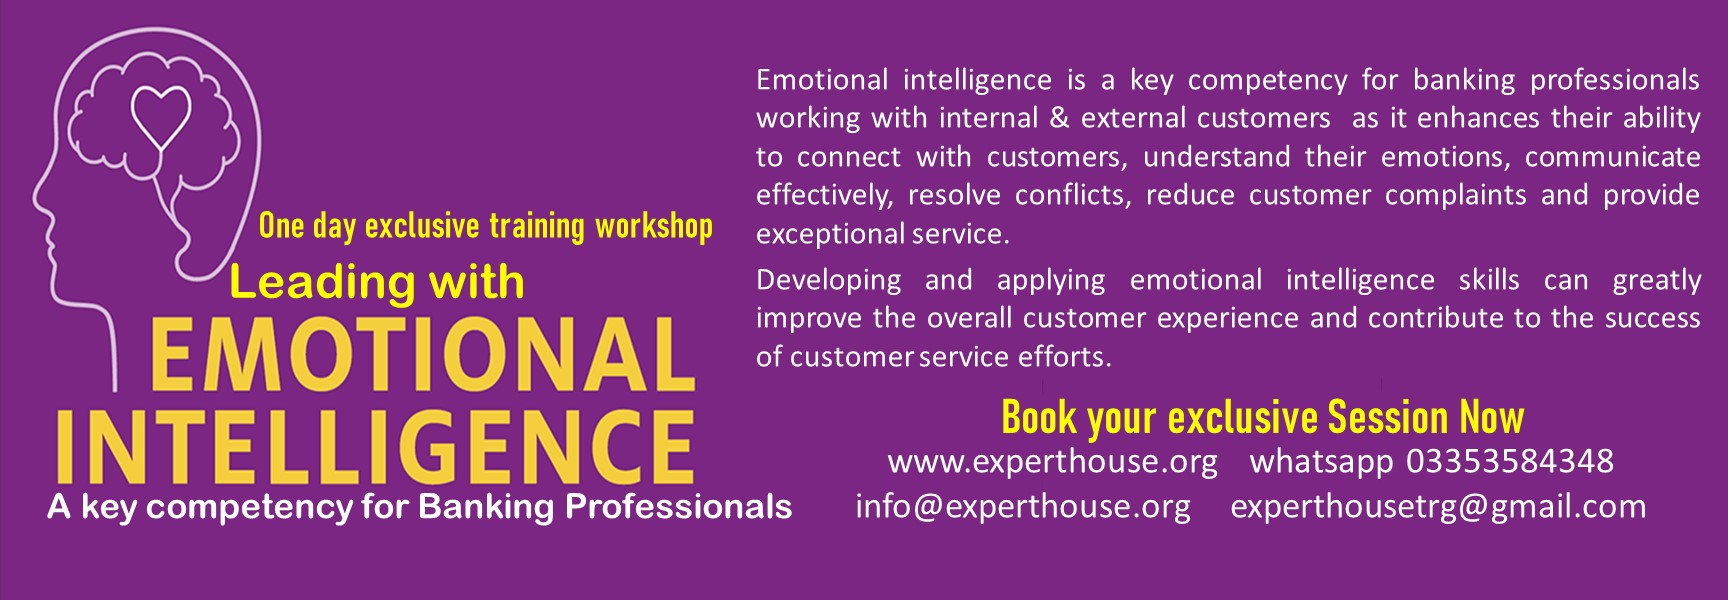 Emotional Intelligence for Banking Professionals